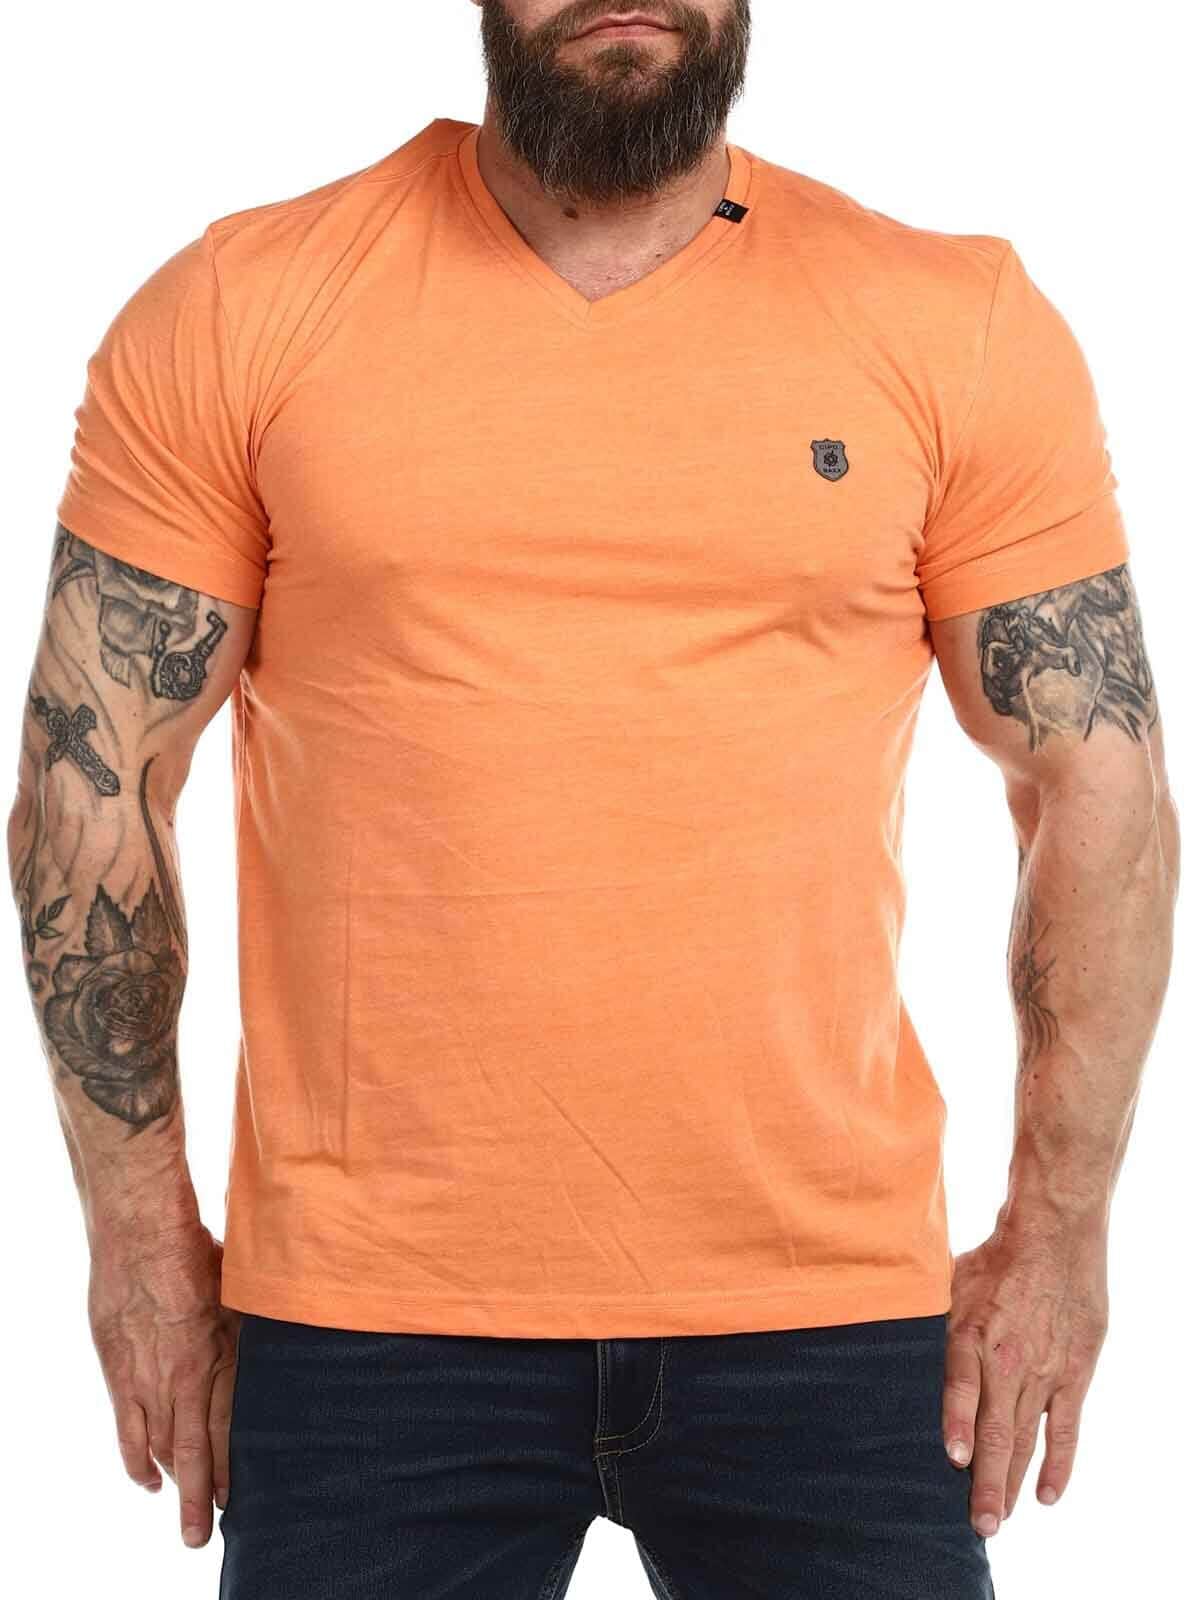 Chase Cipo & Baxx T-shirt - Orange